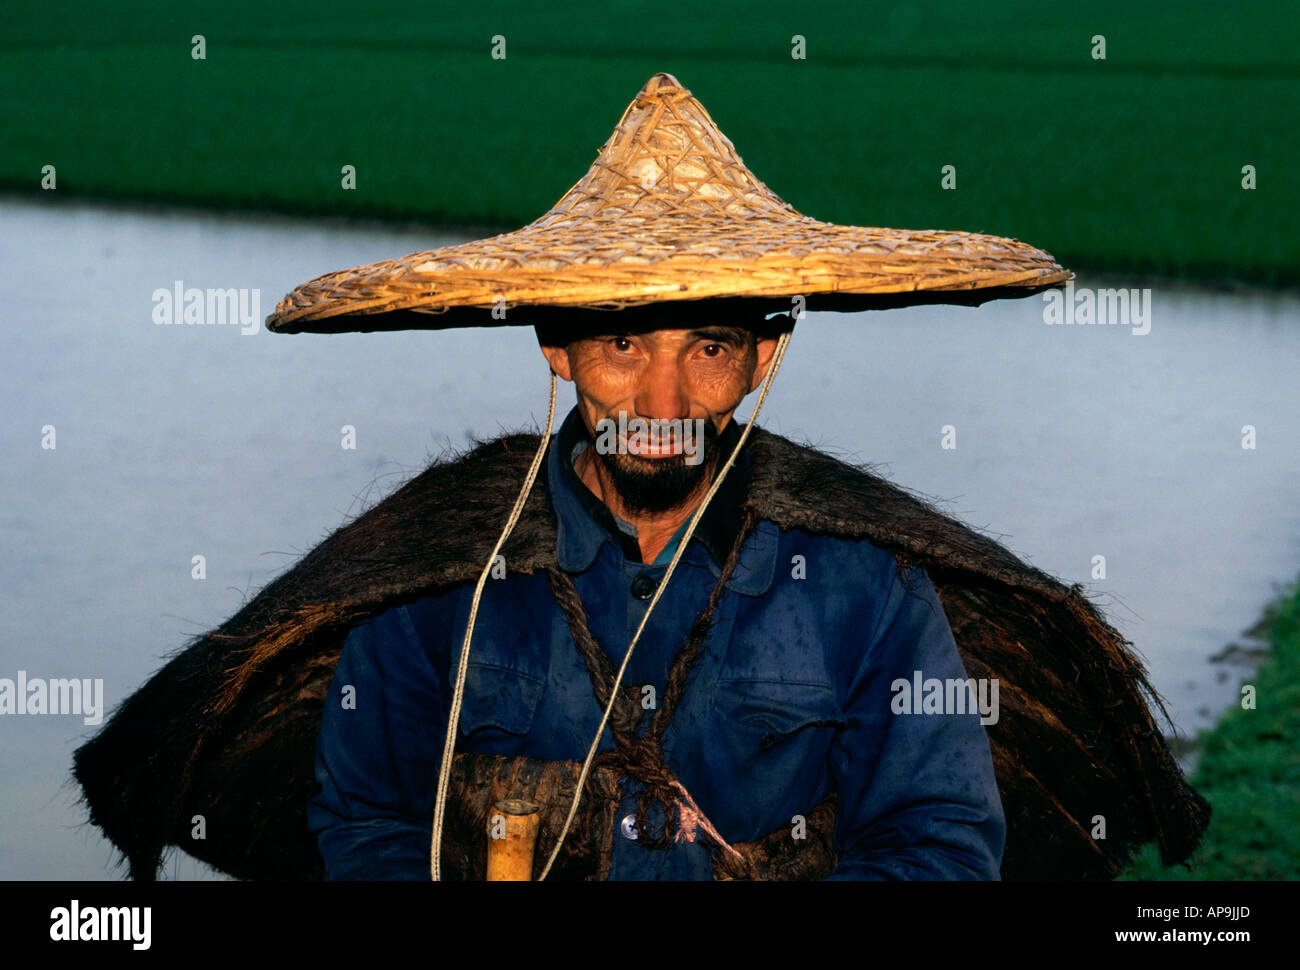 https://c8.alamy.com/compes/ap9jjd/1-un-hombre-chino-agricultor-vistiendo-sombrero-conico-contacto-visual-vista-frontal-vertical-entre-la-luna-y-la-colina-de-yangshuo-guangxi-china-asia-ap9jjd.jpg